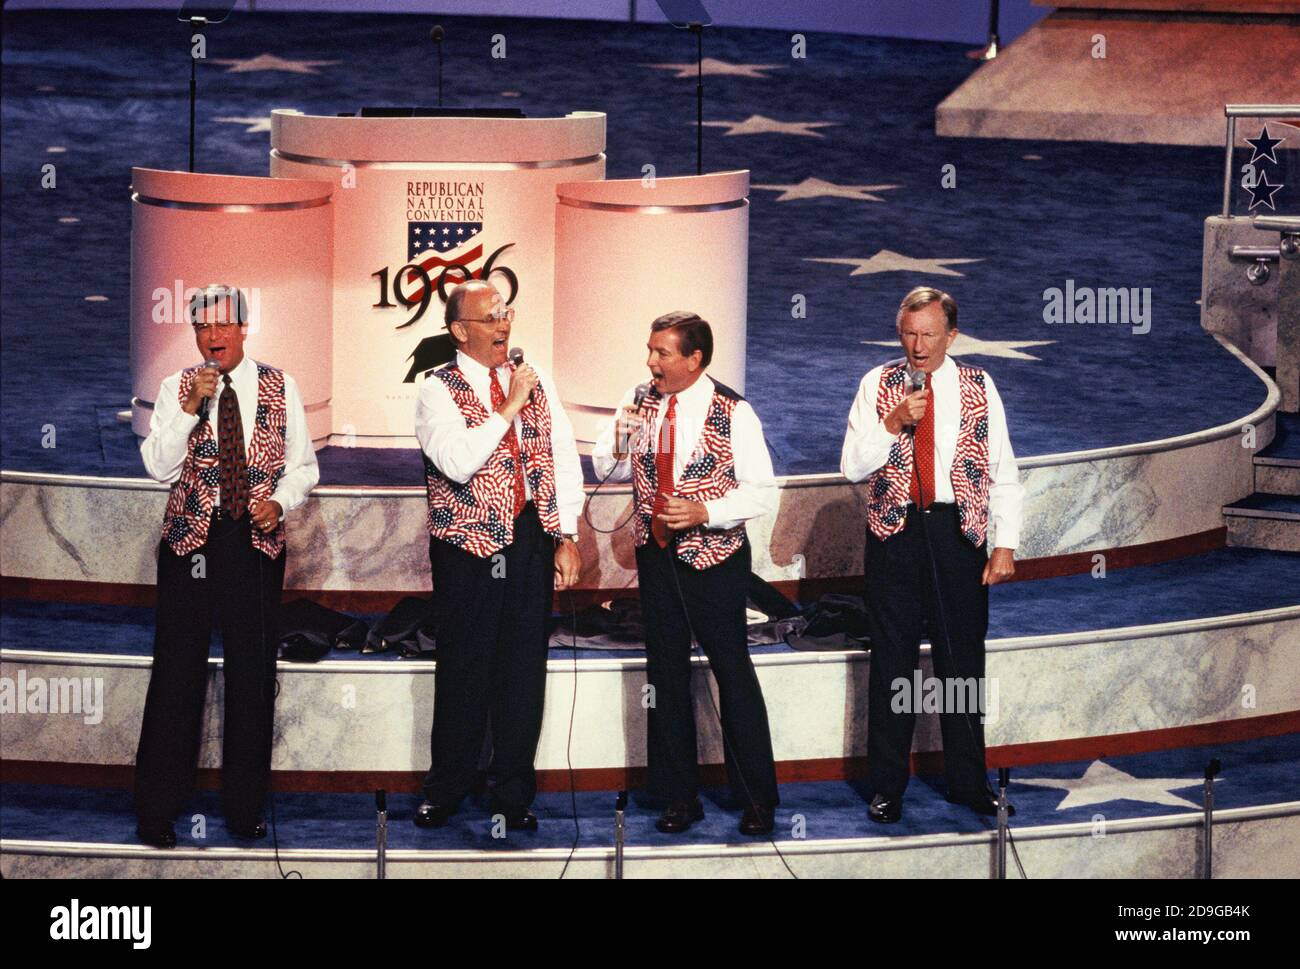 The Singinbg Senatrors,  Senators Trent Lott, Larry Craig, John Ashcroft and Jim Jeffords. at the 1996 Republican Convention Photo by Dennis Brack bb73 Stock Photo